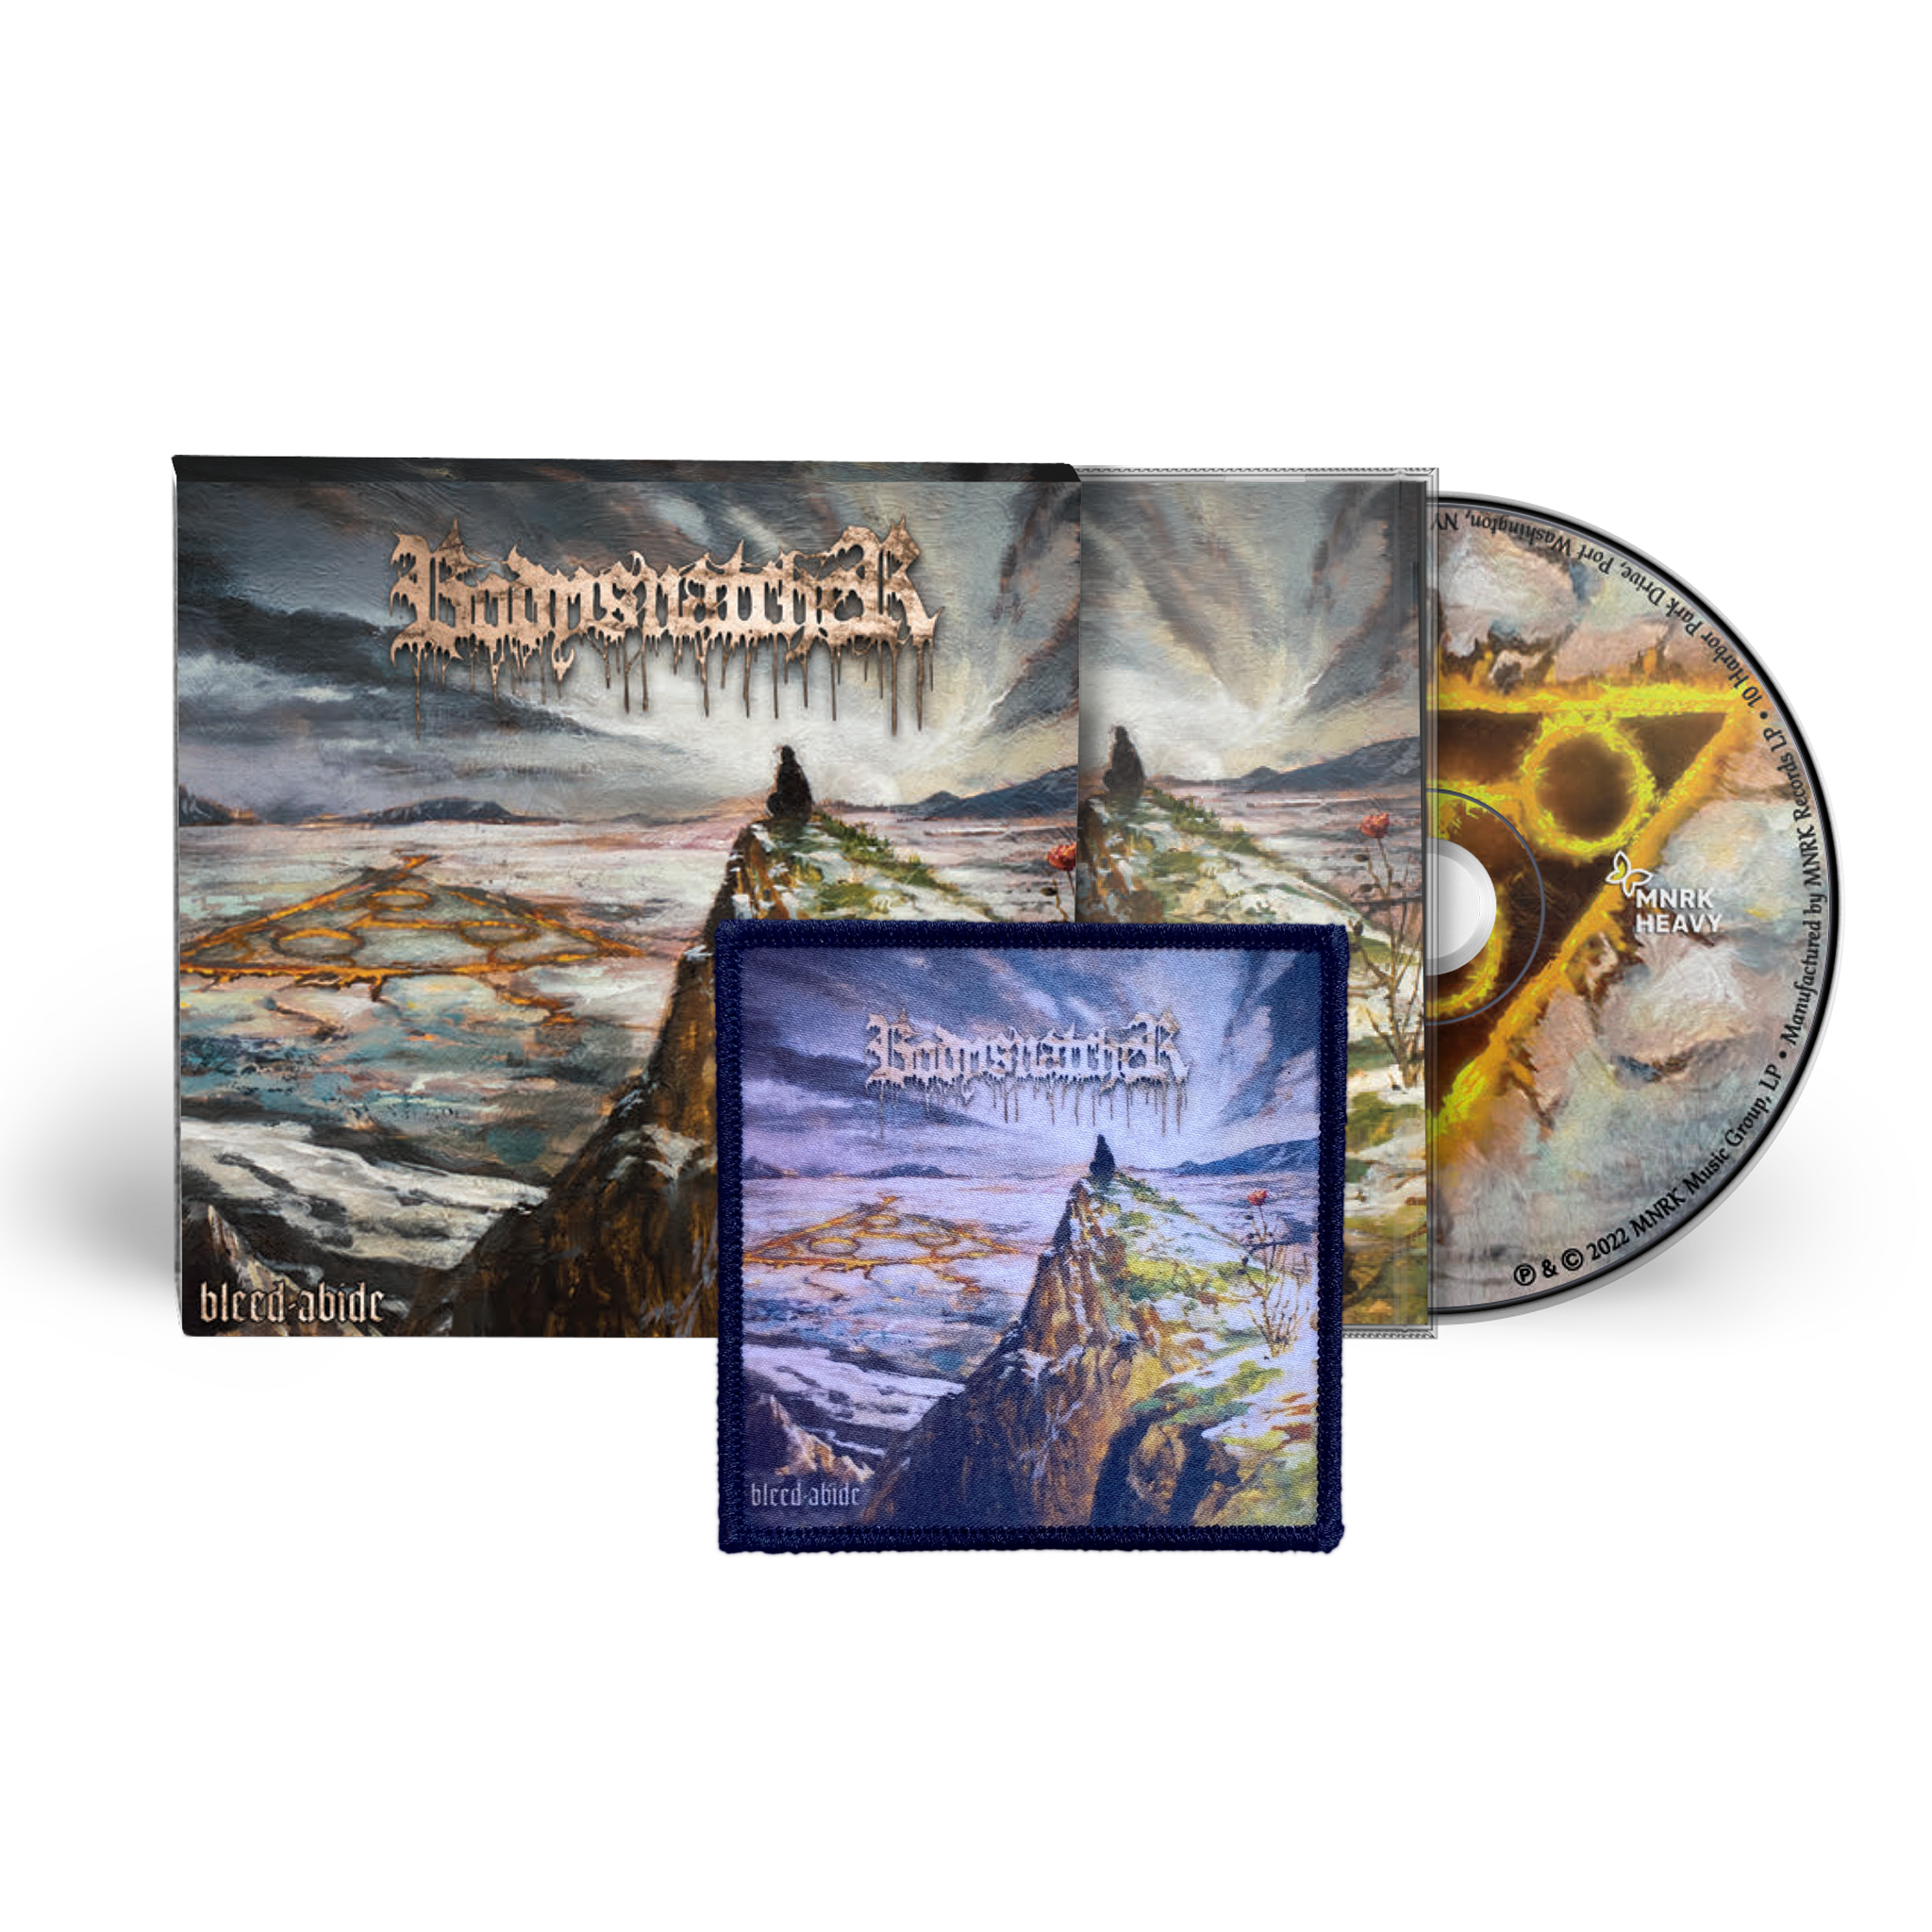 Bodysnatcher Bleed-Abide CD Bonus Edition